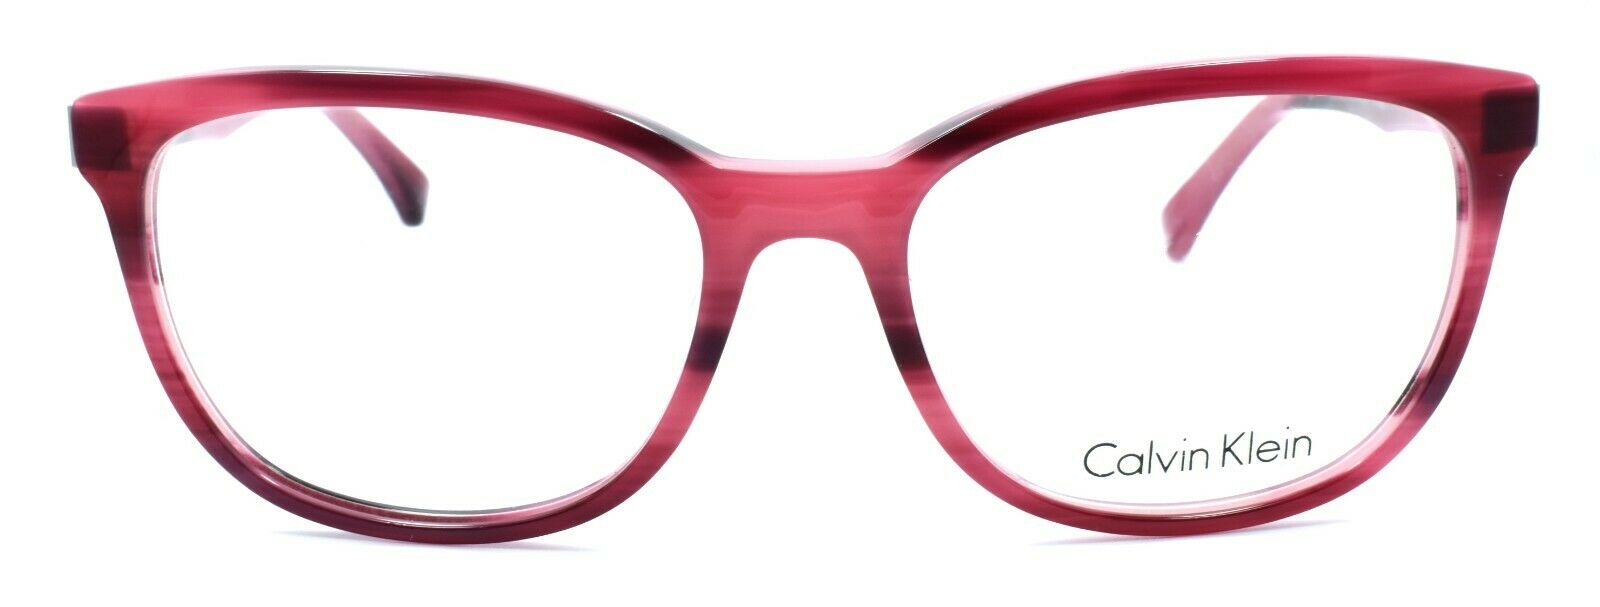 2-Calvin Klein CK5879 480 Women's Eyeglasses Frames 52-17-135 Striped Violet-750779080160-IKSpecs